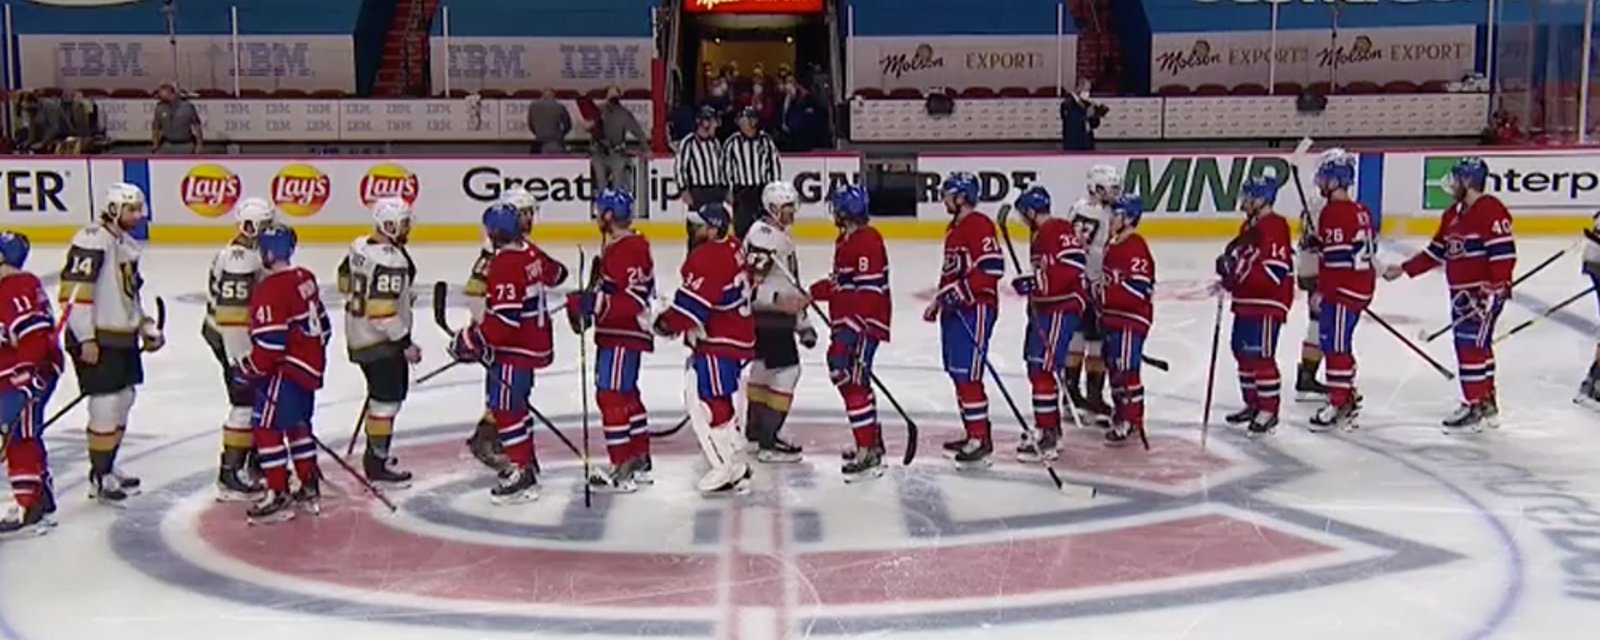 Lehkonen's OT winner sends the Canadiens to the Stanley Cup Final